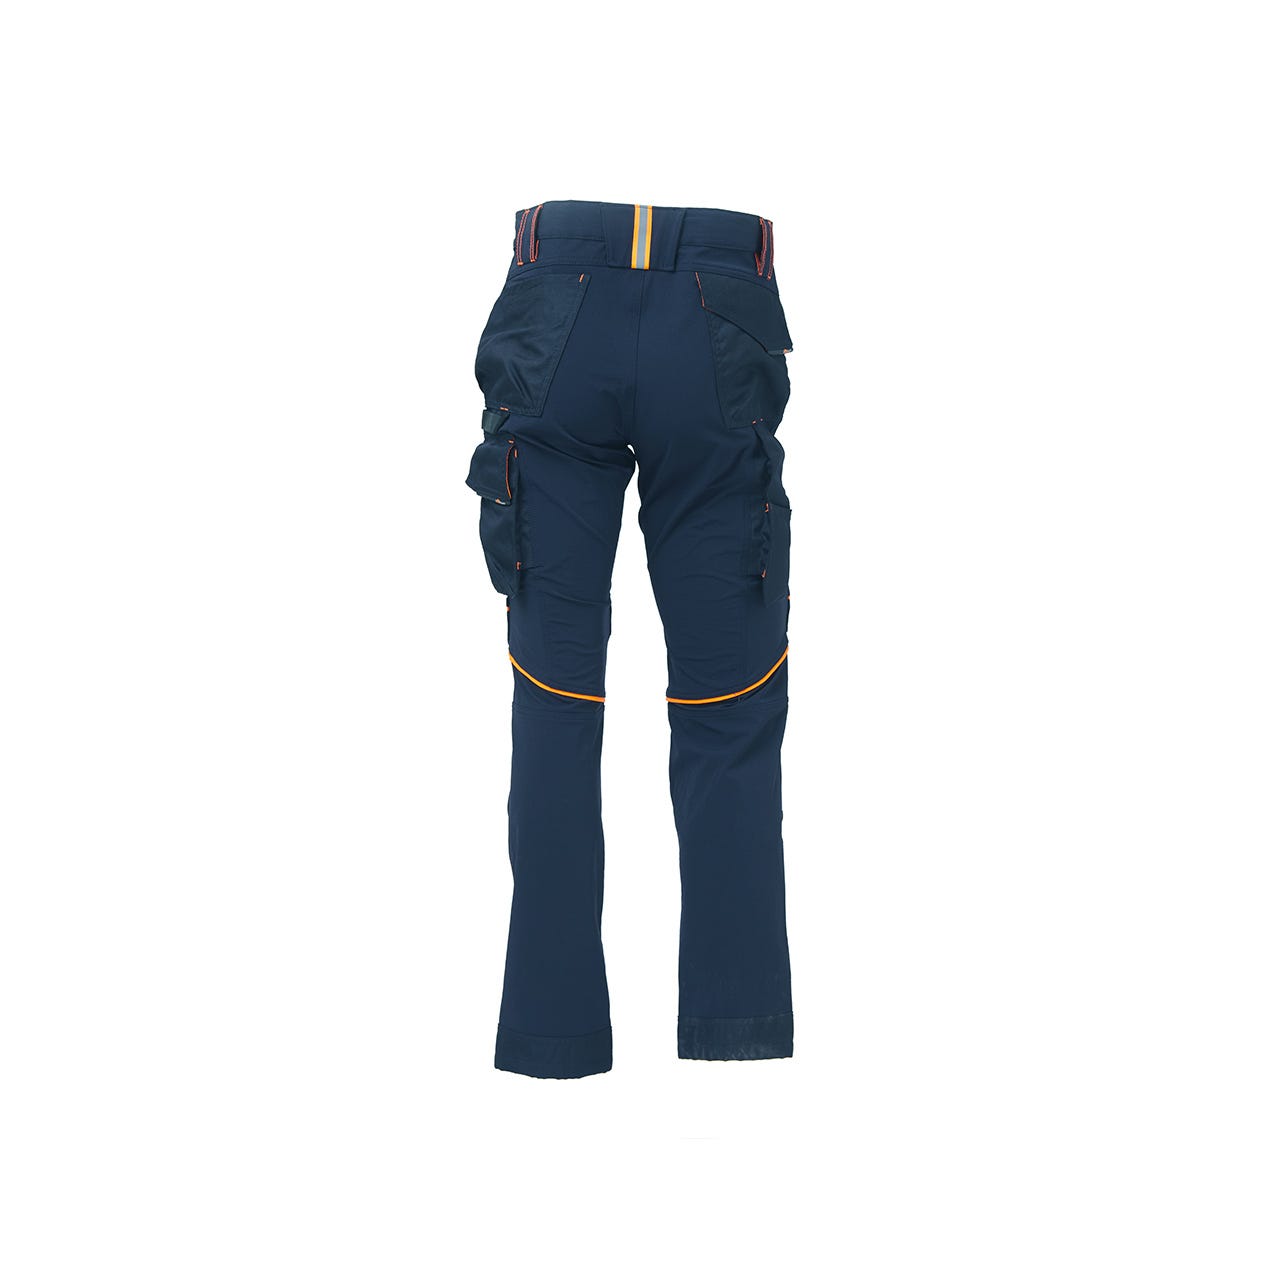 Pantalon de travail Stretch multipoches ATOM - Bleu 5XL 4